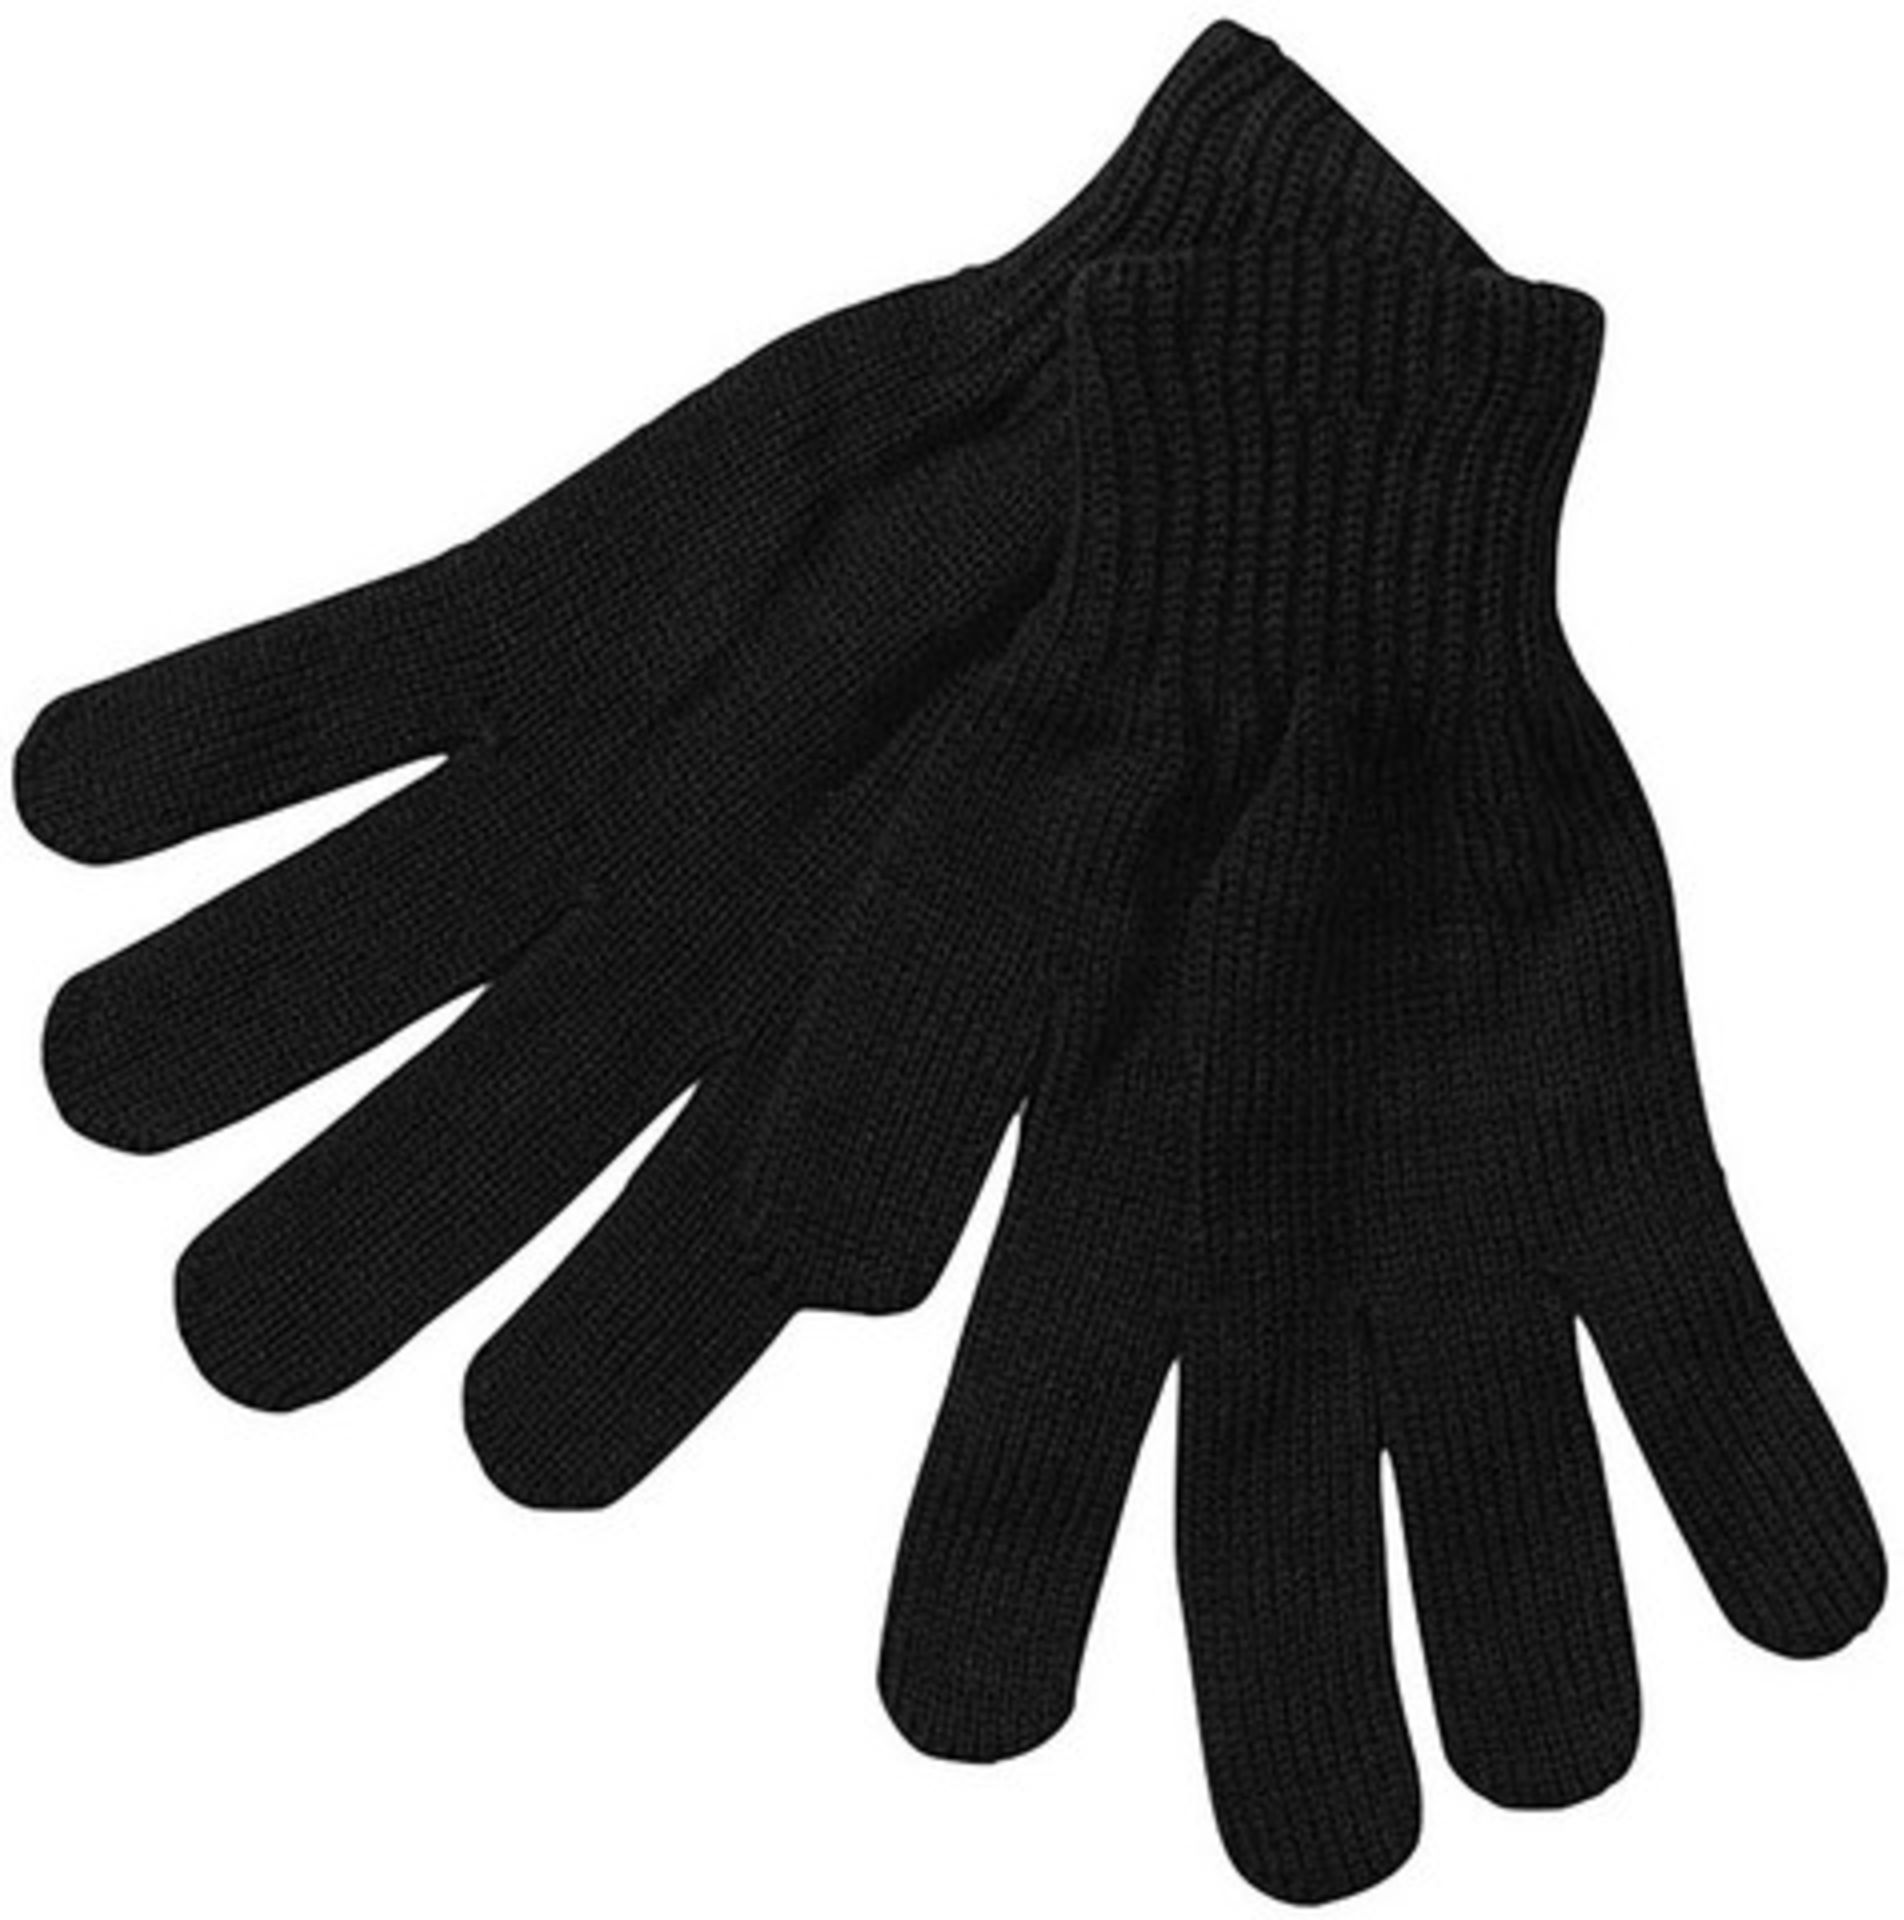 + VAT Brand New Job Lot of Twelve Pairs Mens Black Thermal Lined Winter Gloves RRP £3.99 Per Pair - Image 2 of 2